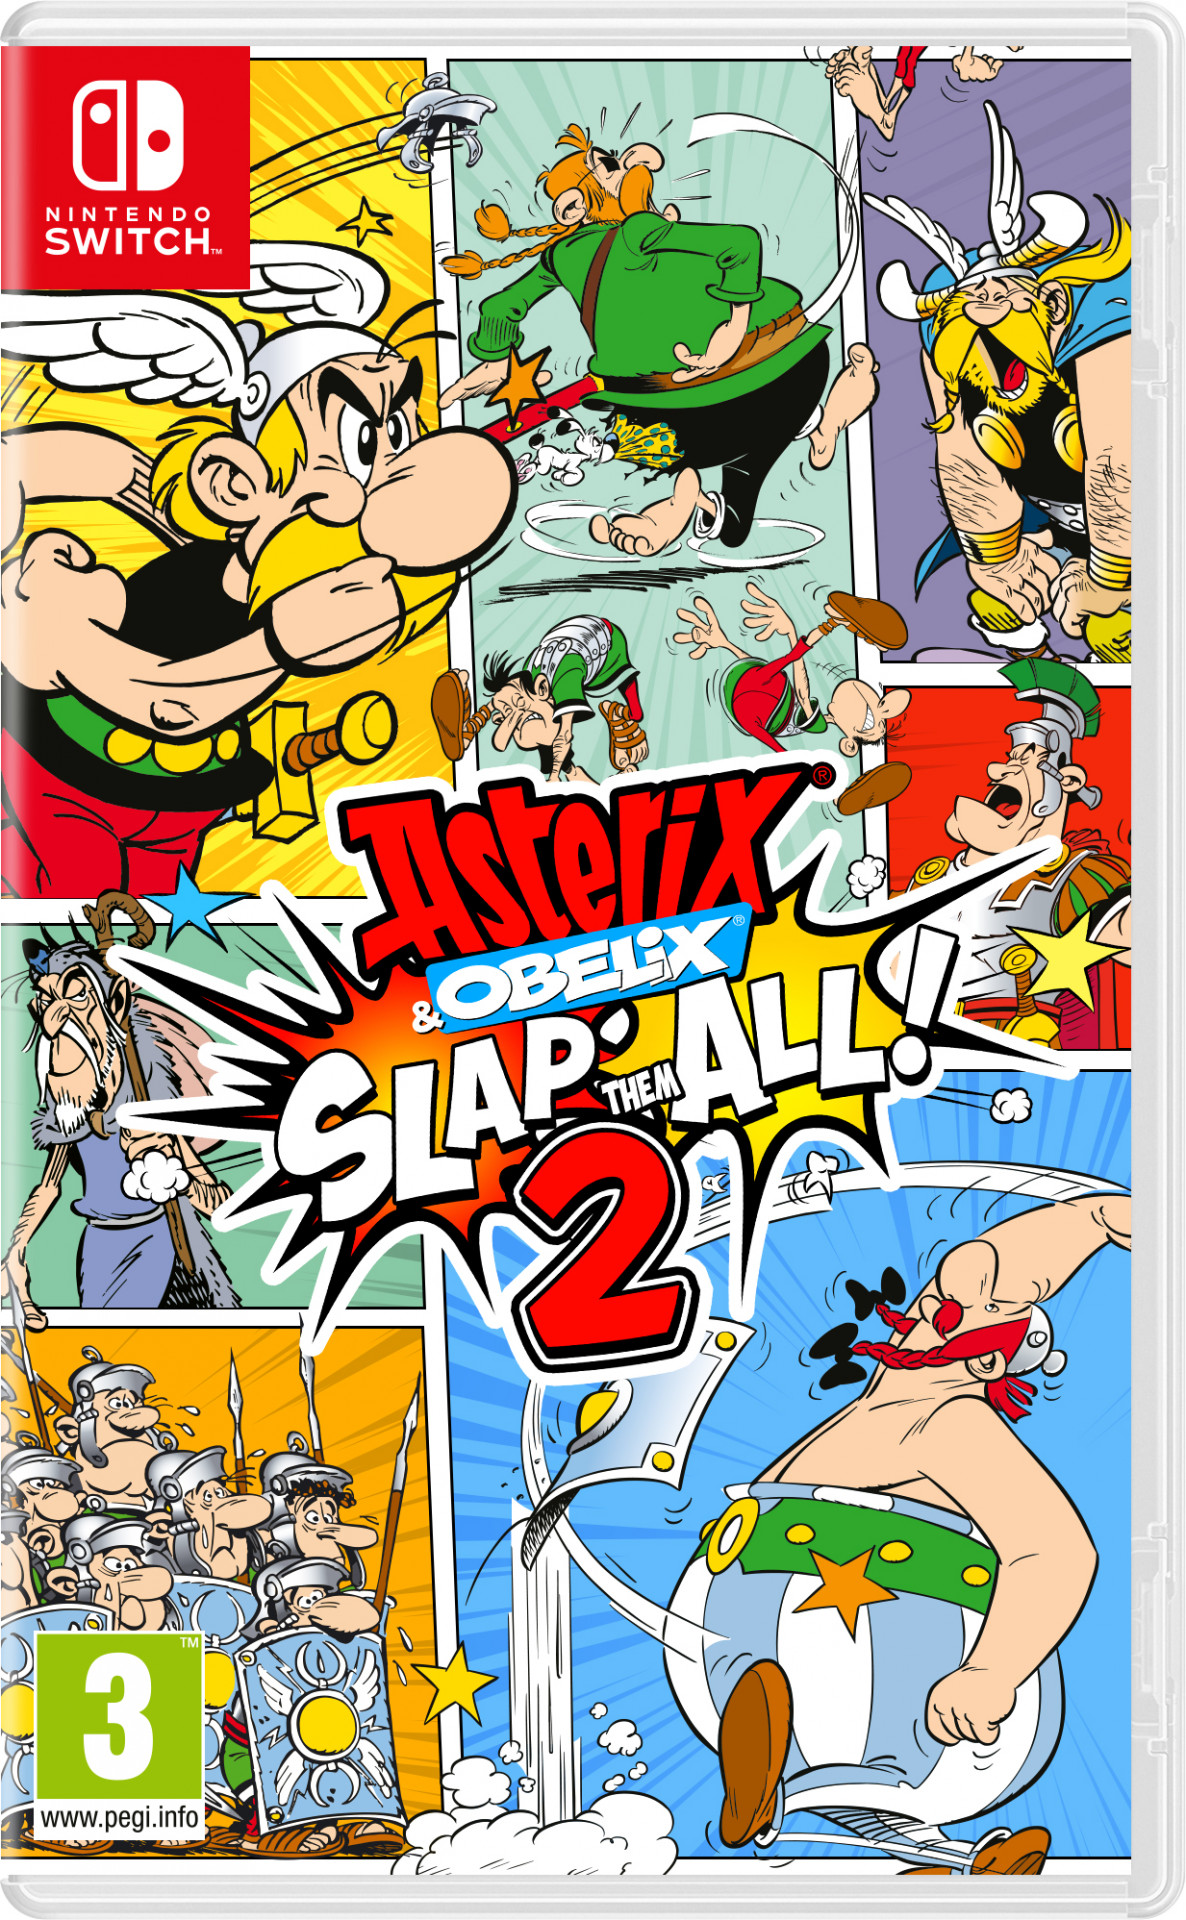 Asterix & Obelix: Slap Them All! 2 (Switch), Microids